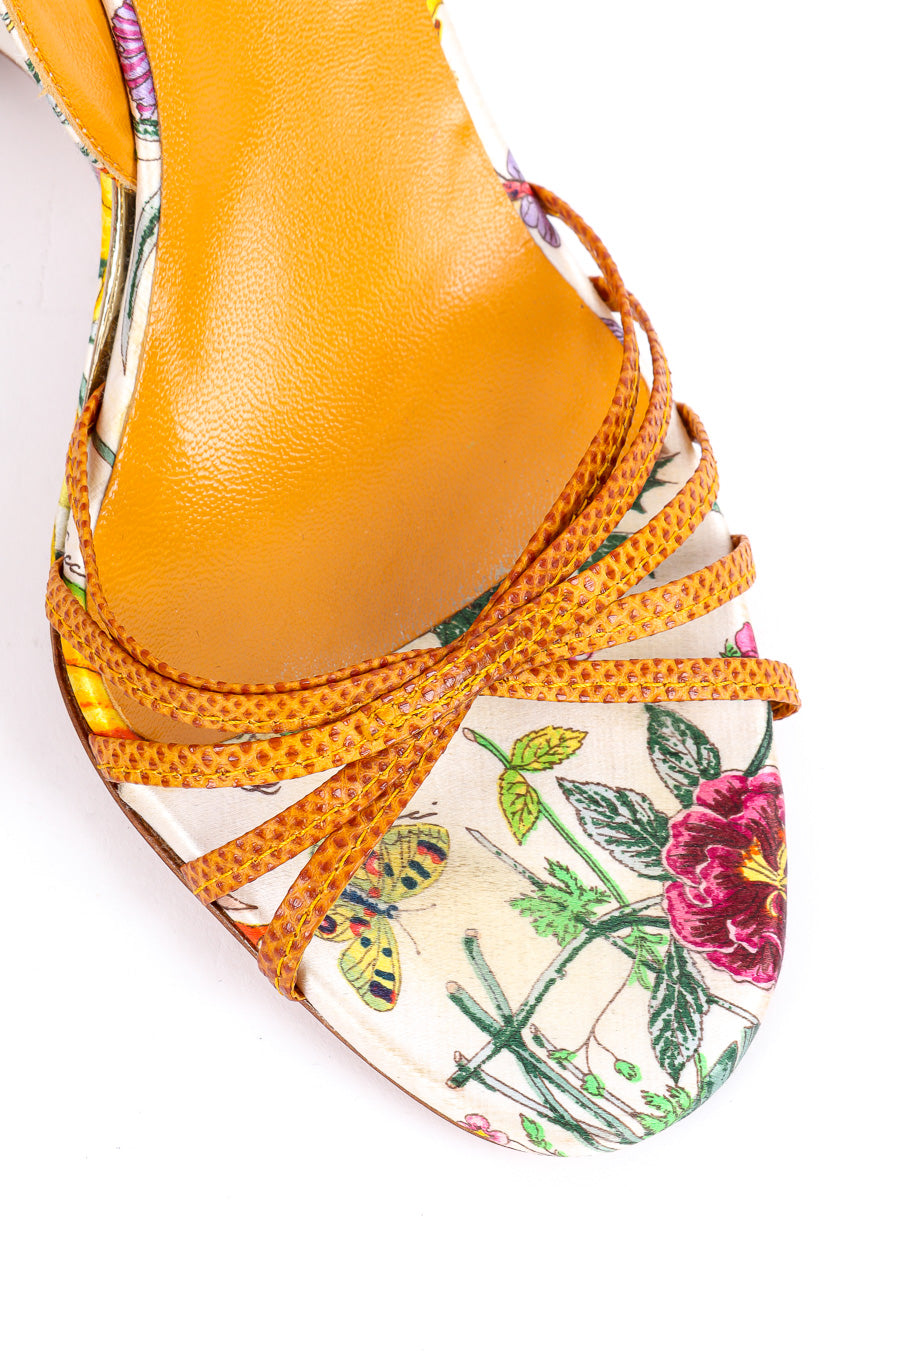 Gucci floral print bamboo wedge sandal strap details @recessla